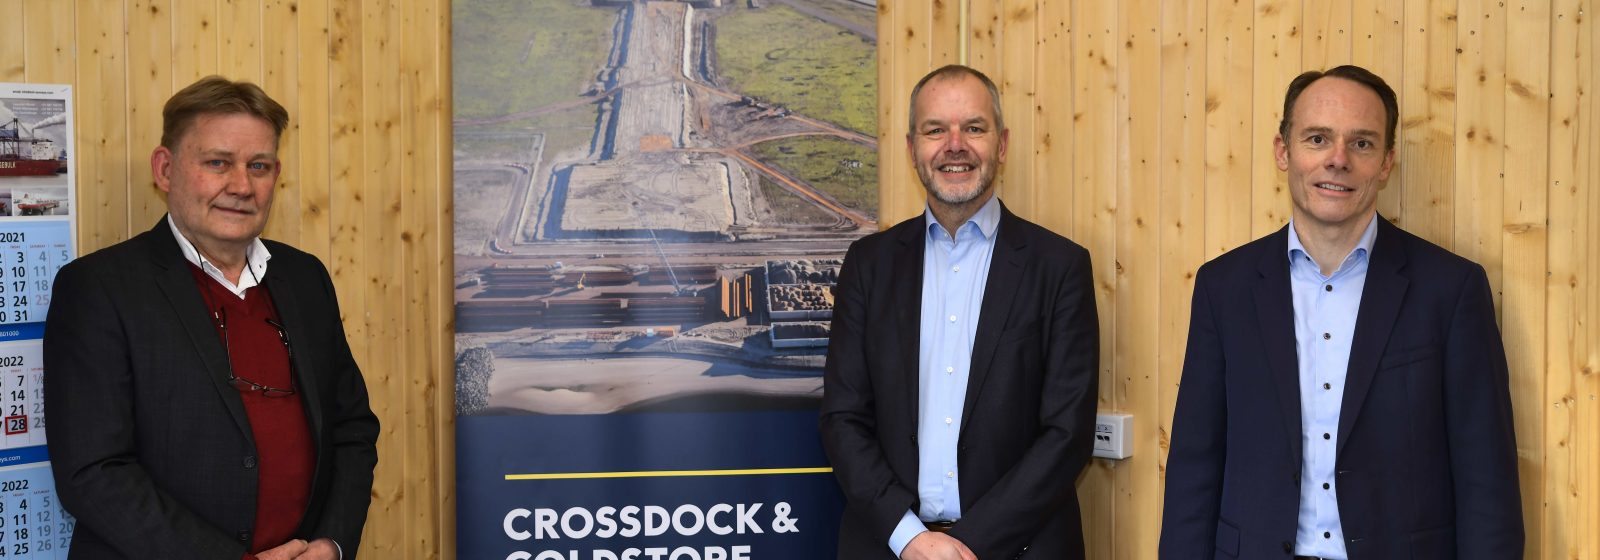 Maersk maakt plan bekend voor bouw crossdock en coldstore in Rotterdam . V.l.n.r.  Jan Buijze (APTM2), Hans Nagtegaal (HbR) en Marijn Visser (Maersk)